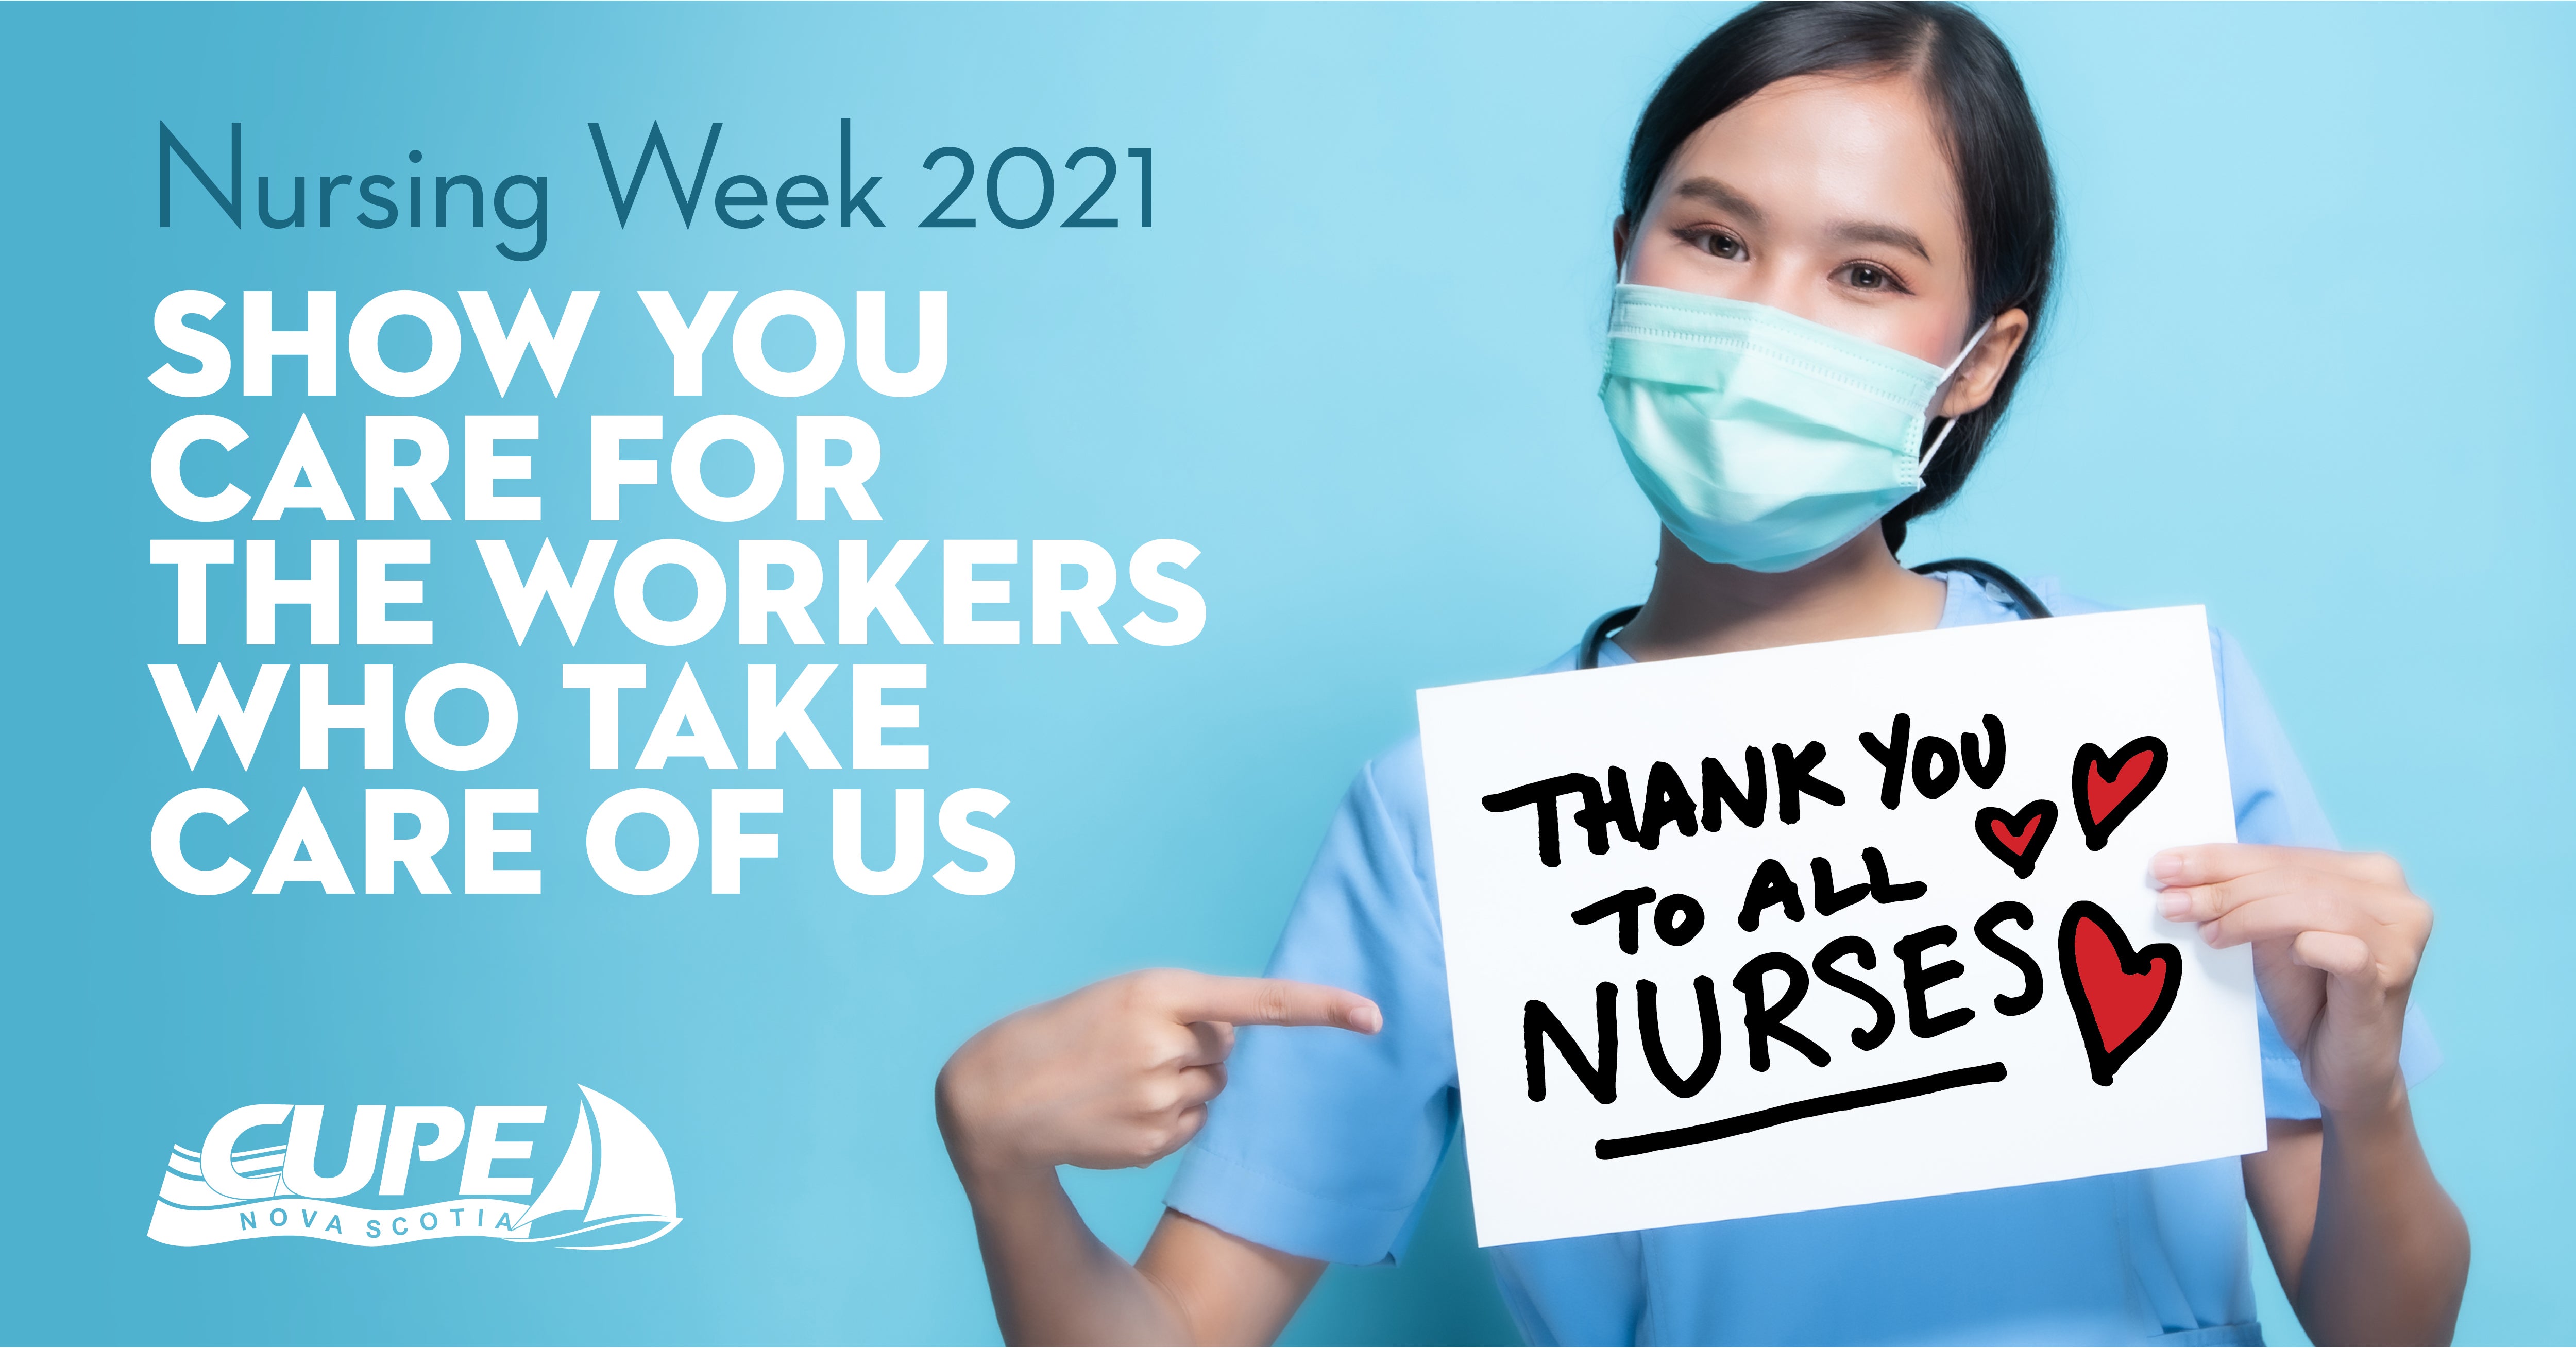 Web banner. Nursing Week 2021: Thank you to all nurses!